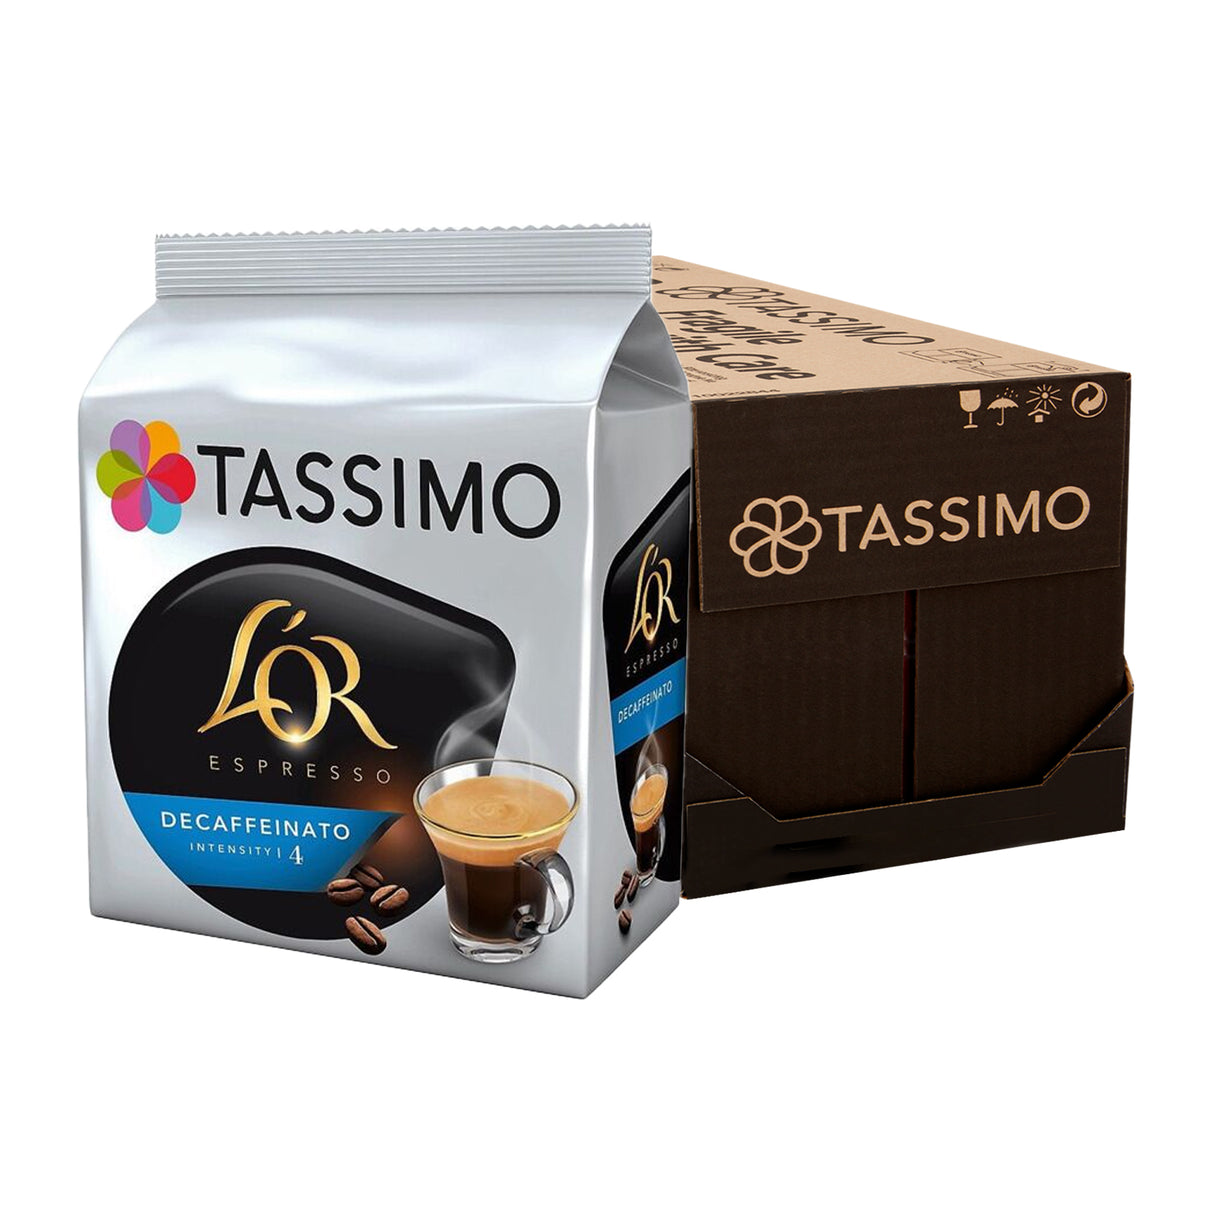 Tassimo L'OR Espresso Decaf Case